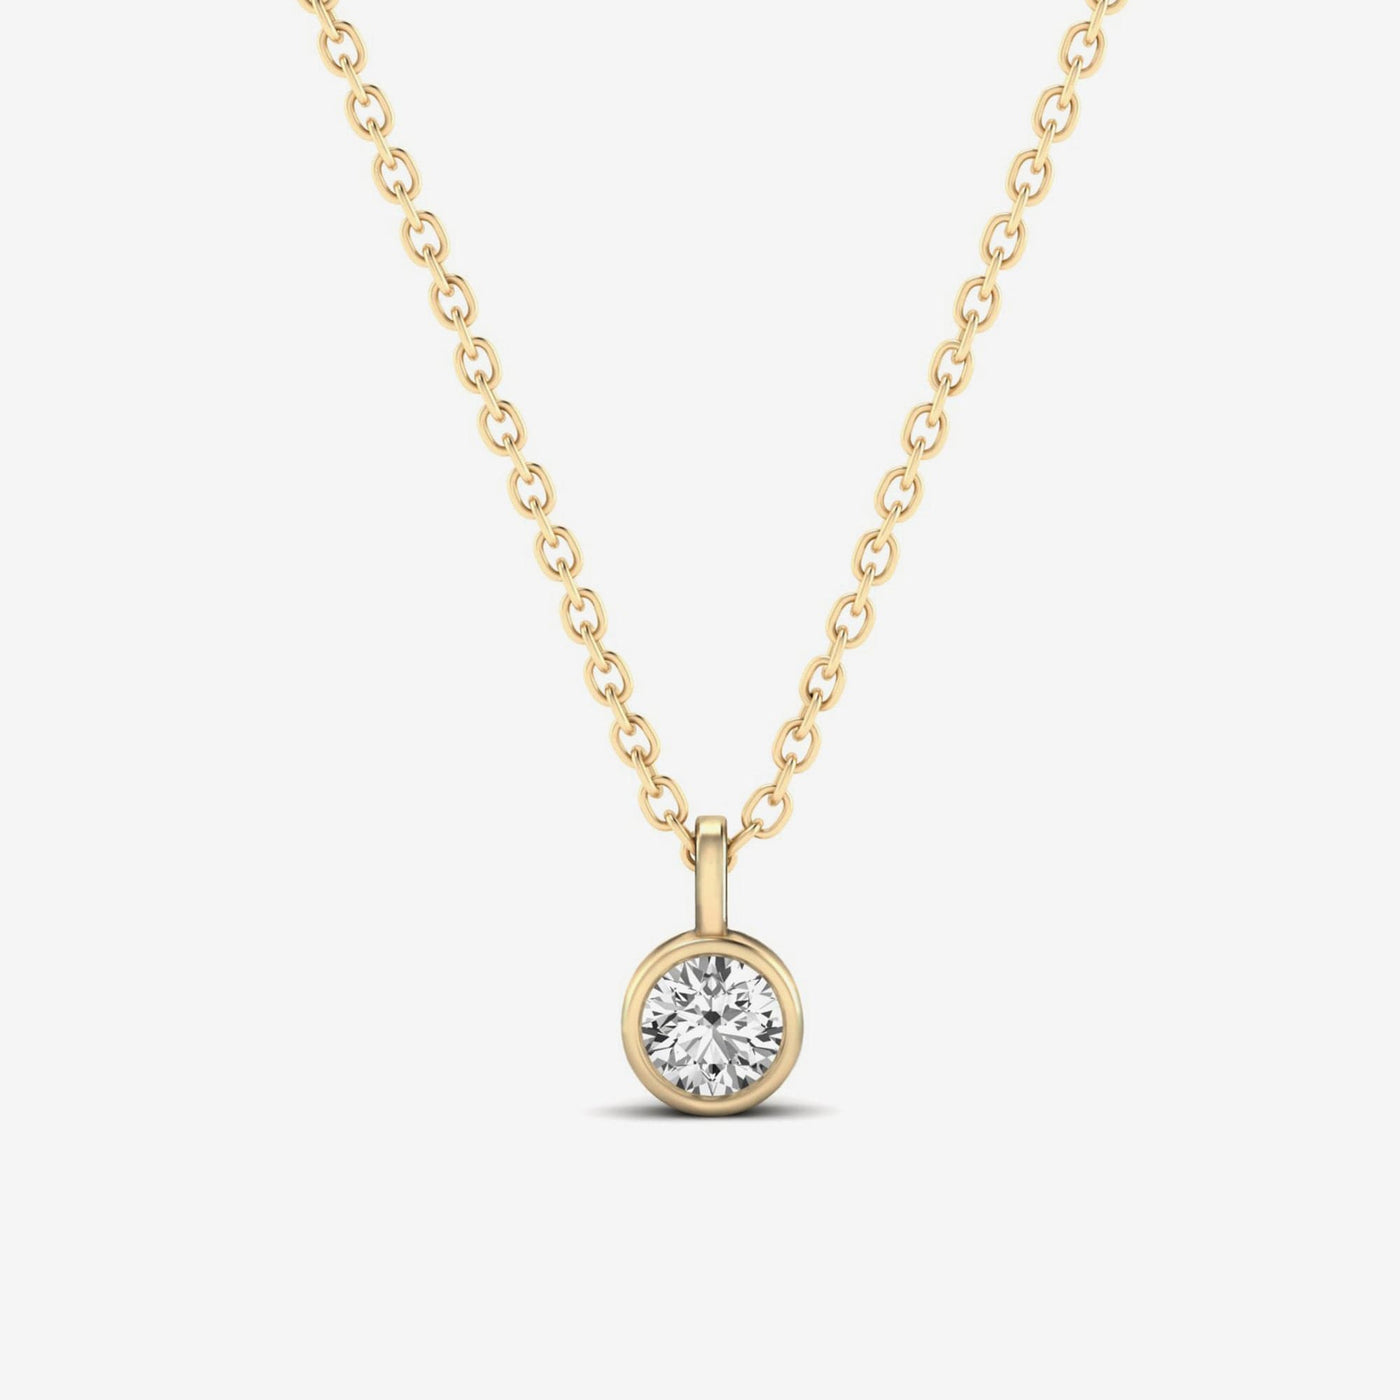 Bezel-Set Solitaire Diamond Pendant Necklace in 14K Yellow Gold  (1/4 ct. tw.)